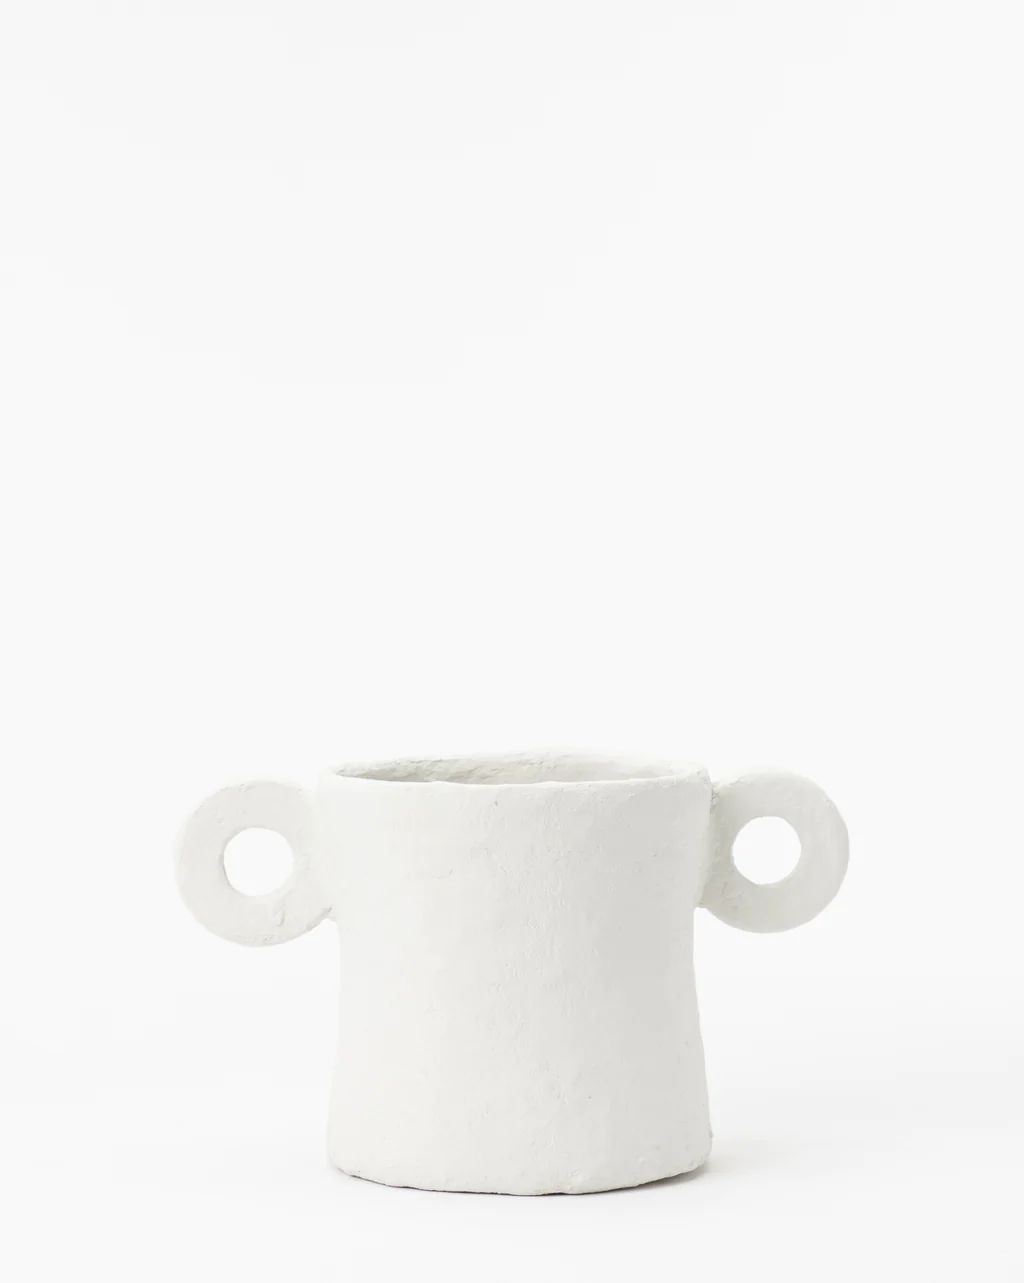 Light Gray Paper Mache Pot | McGee & Co.